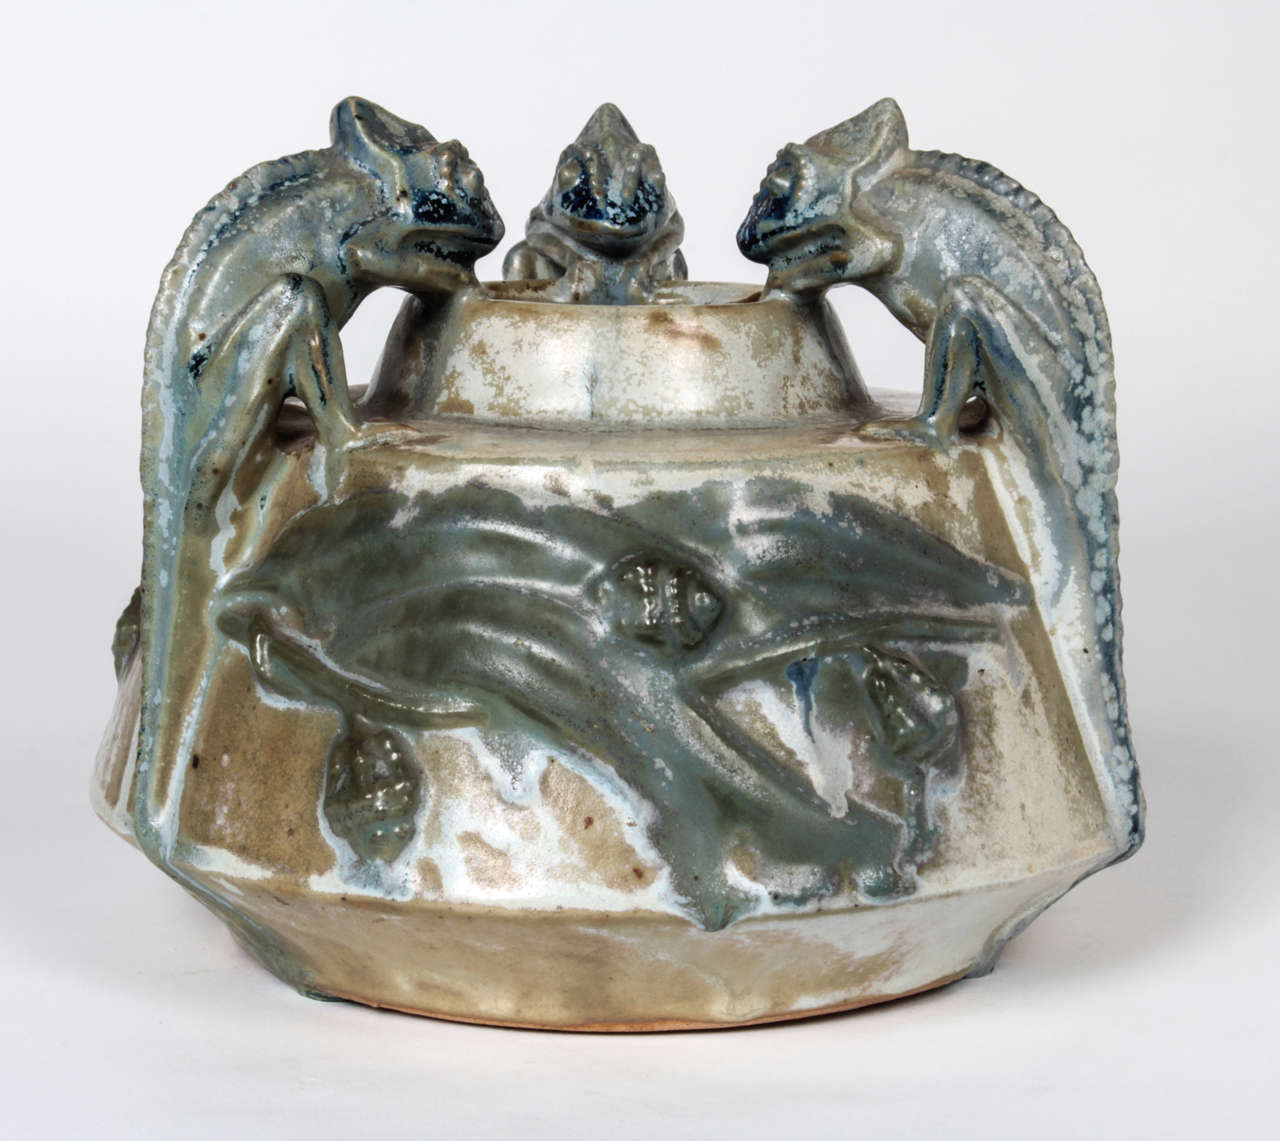 Stoneware Charles Greber French Art Nouveau “Chameleons” vase c. 1905 For Sale